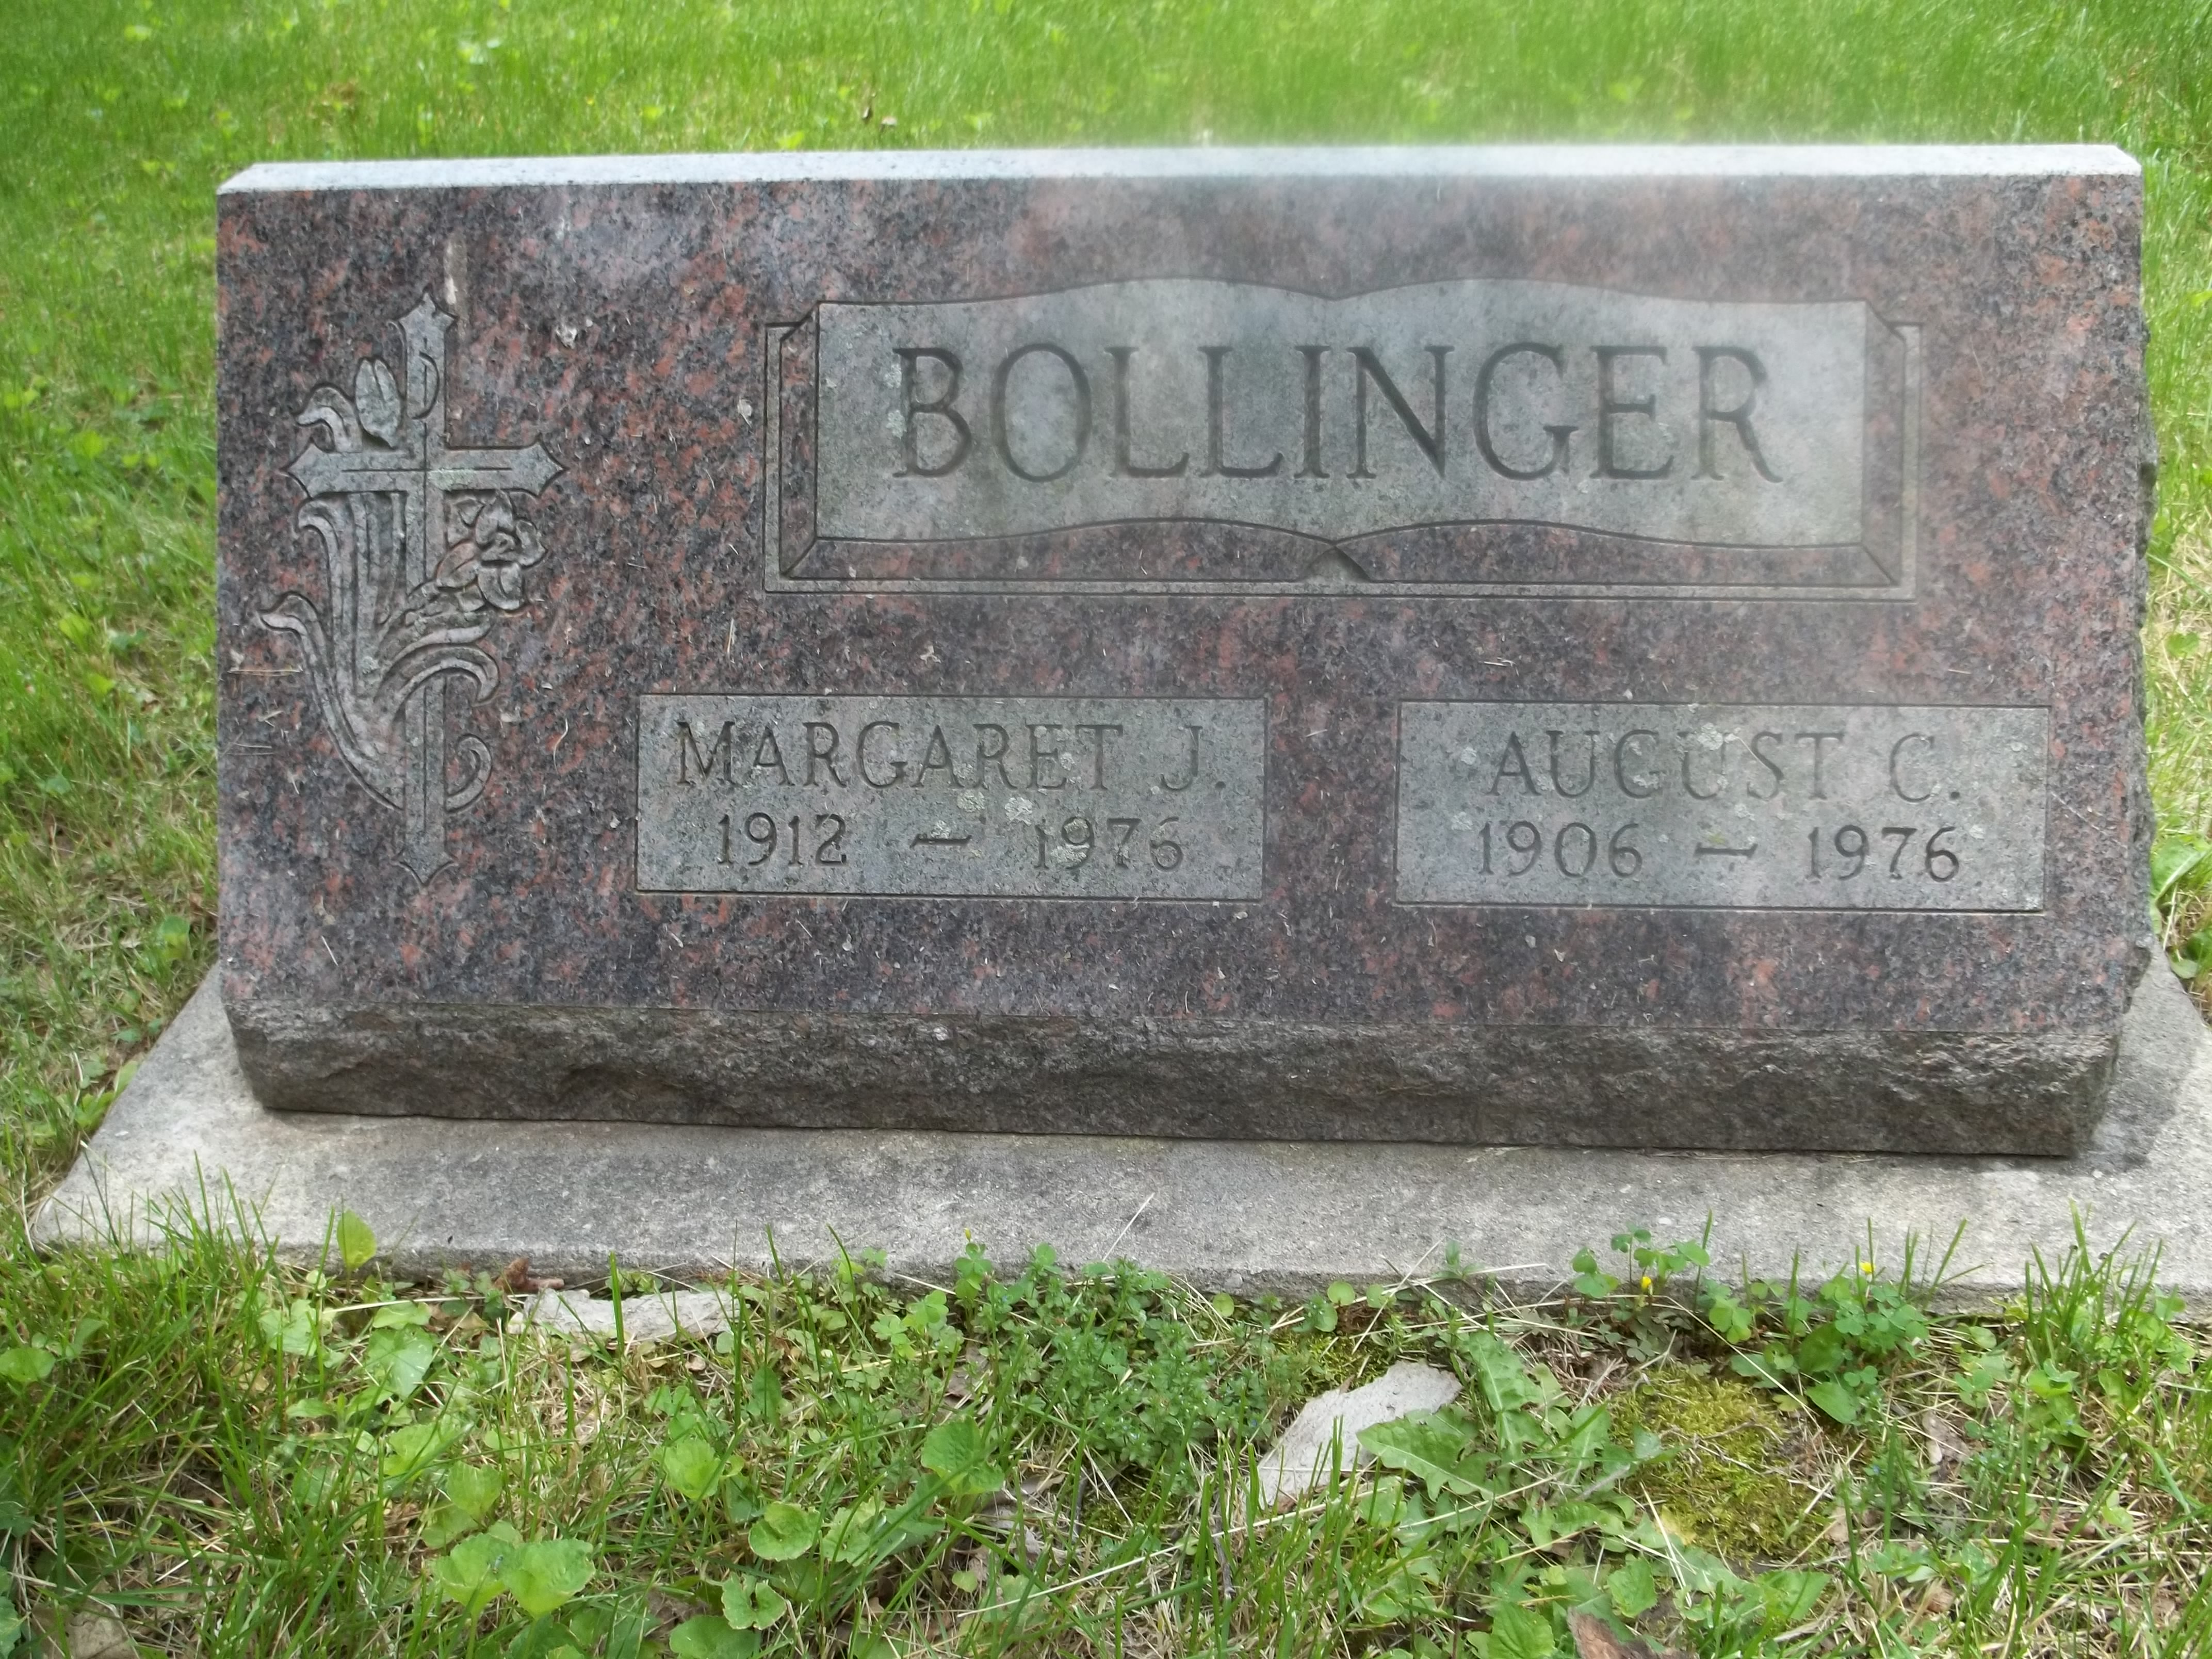 August C. and Margaret J. Bollinger Headstone